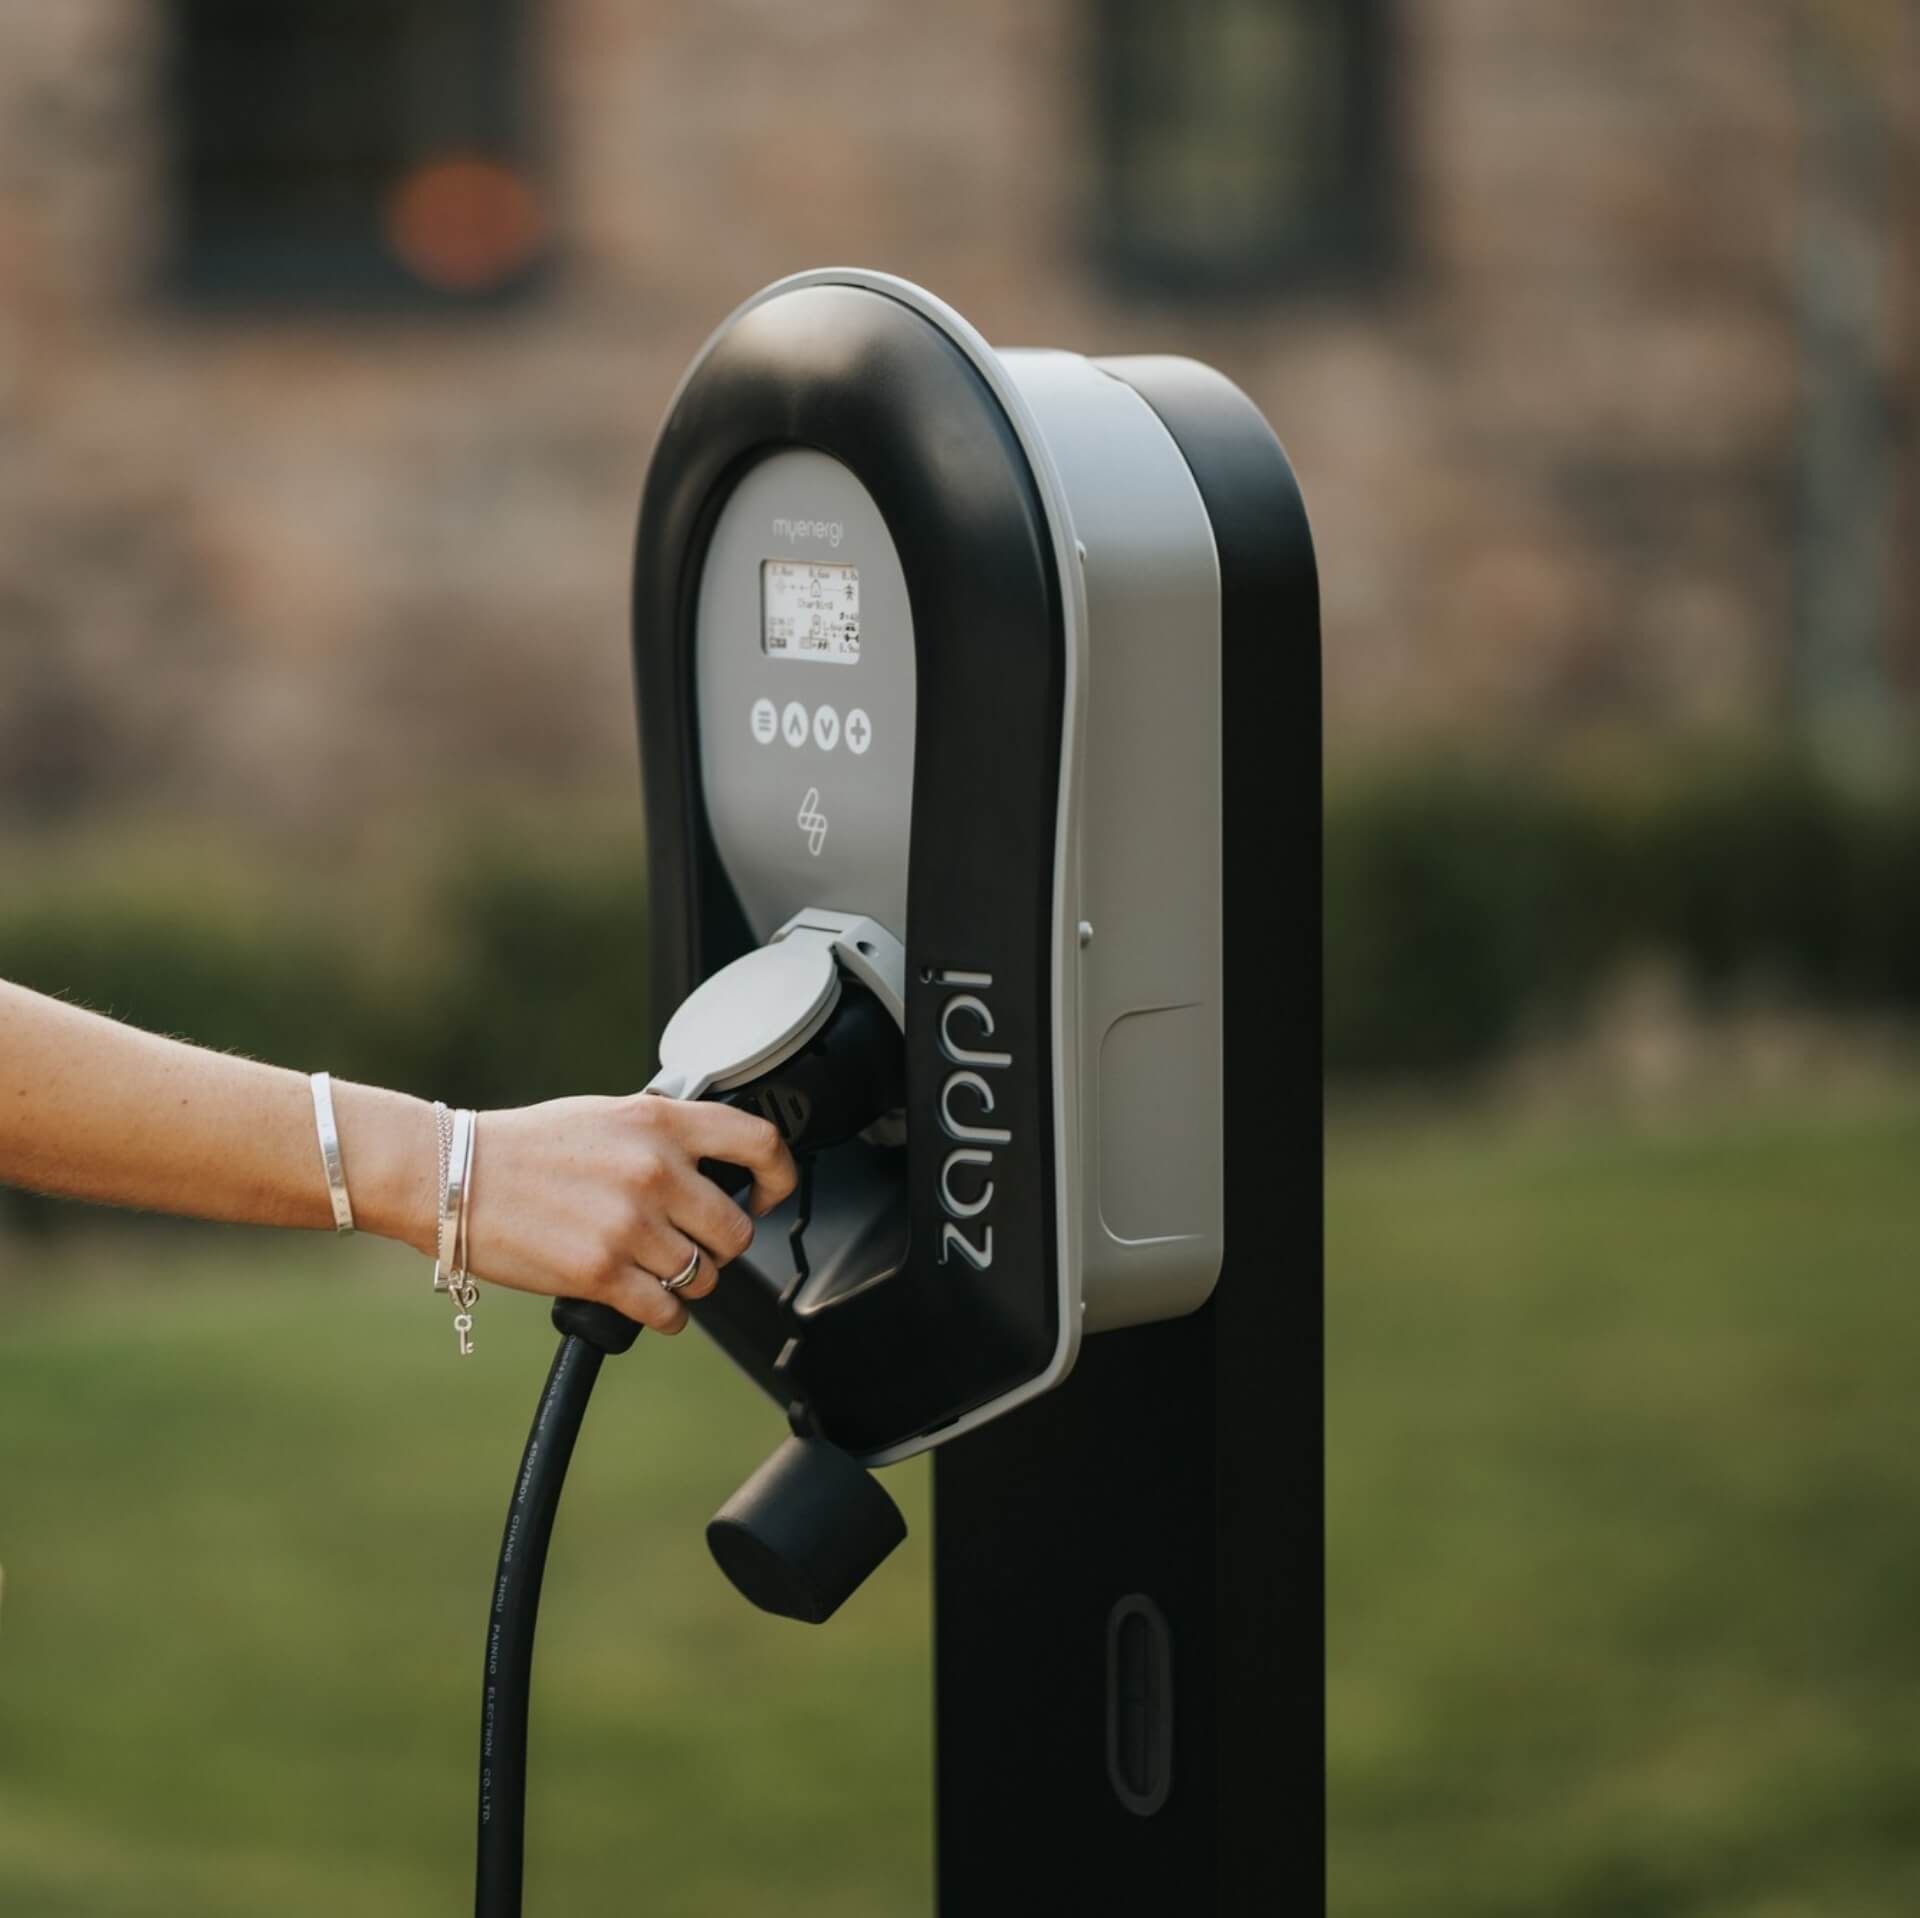 Electric car charging at home | myenergi.com